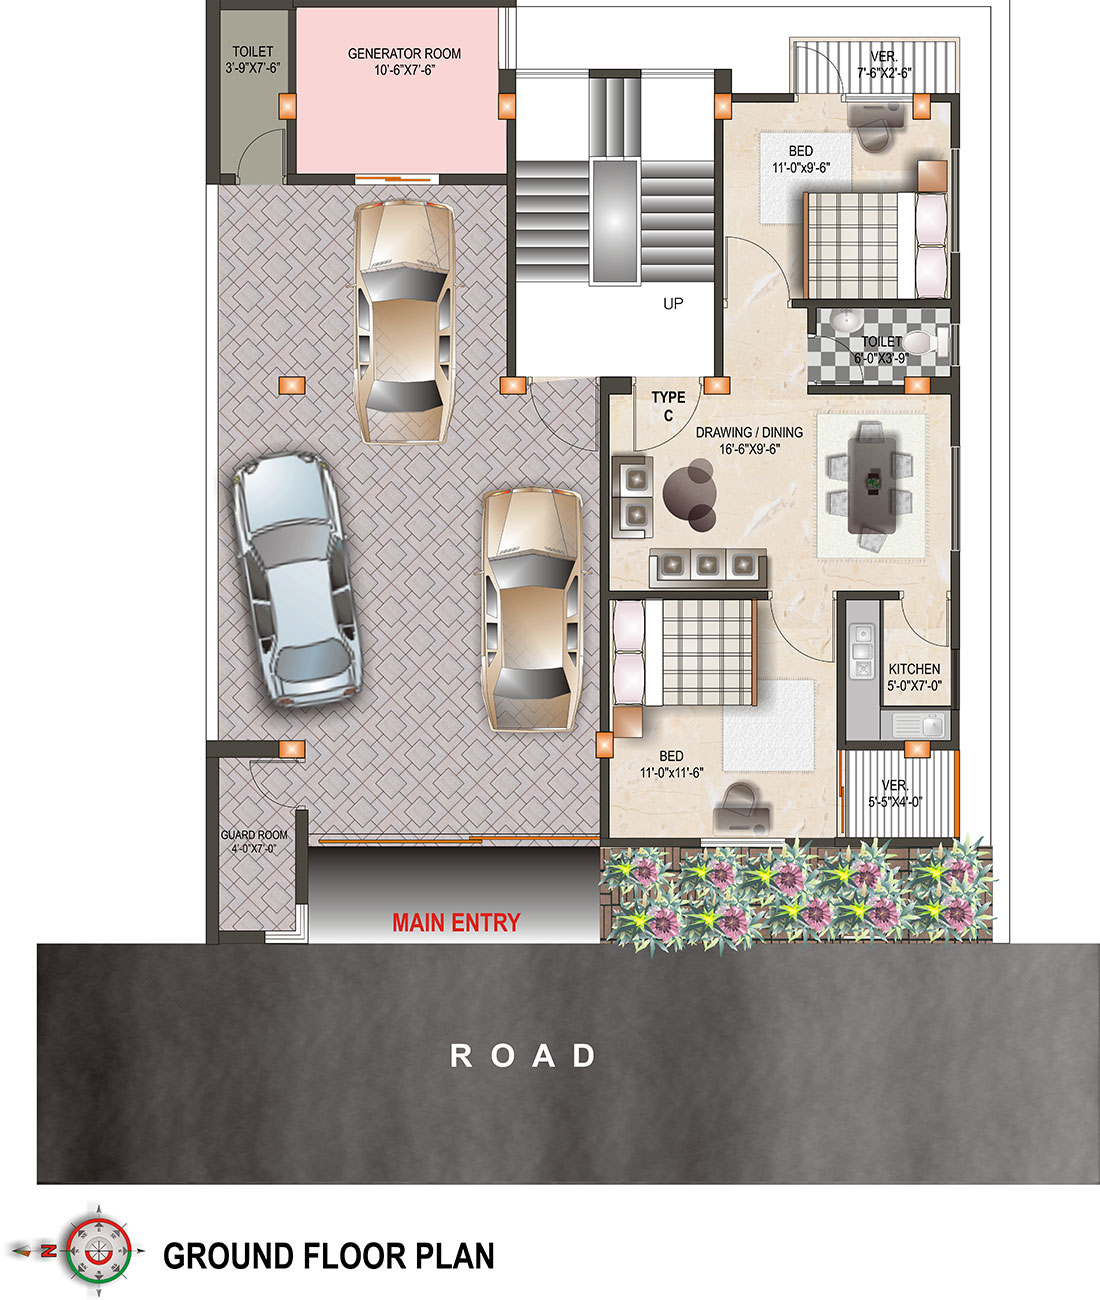 Ground floor plan | nakshi homes Ltd.